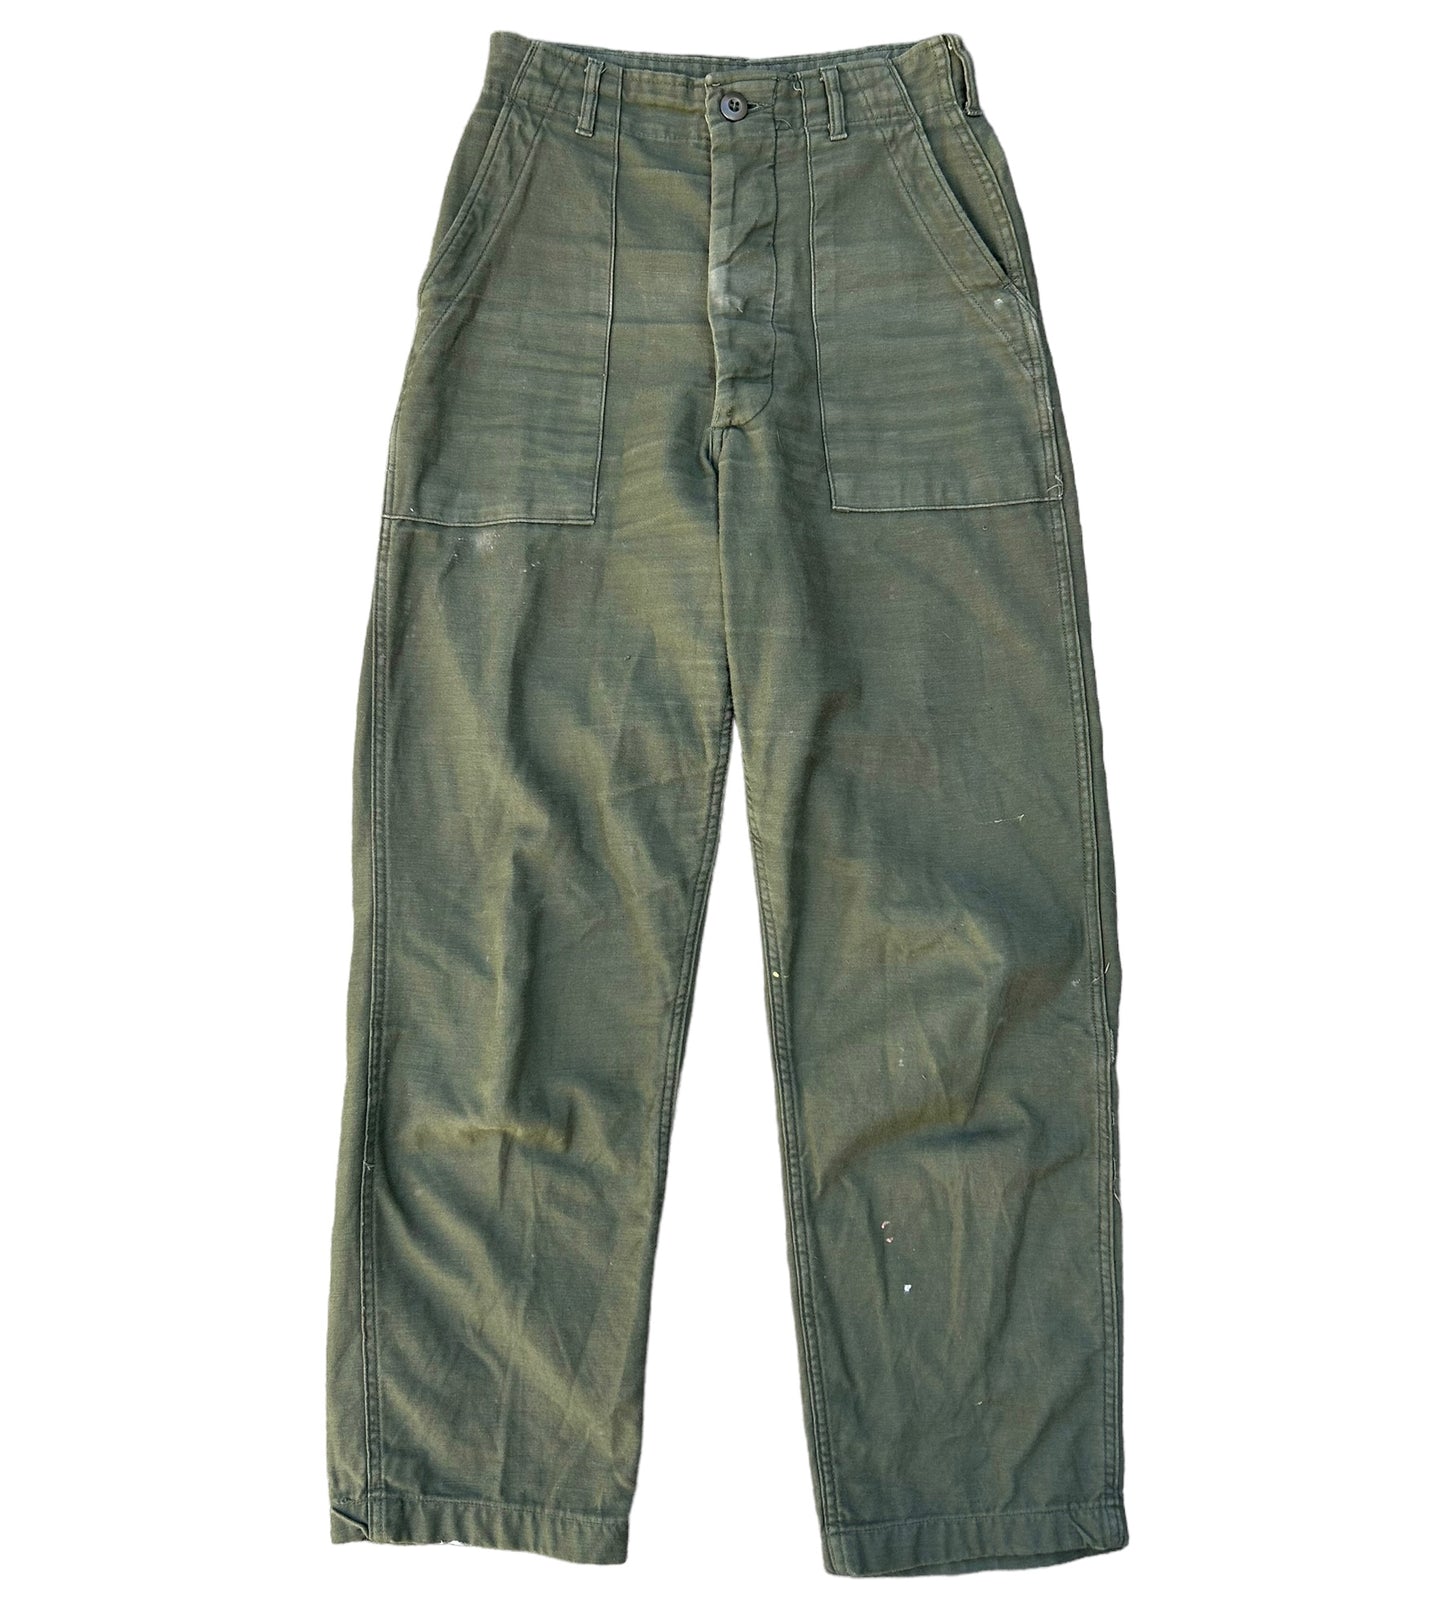 Vintage Military Issued Pants